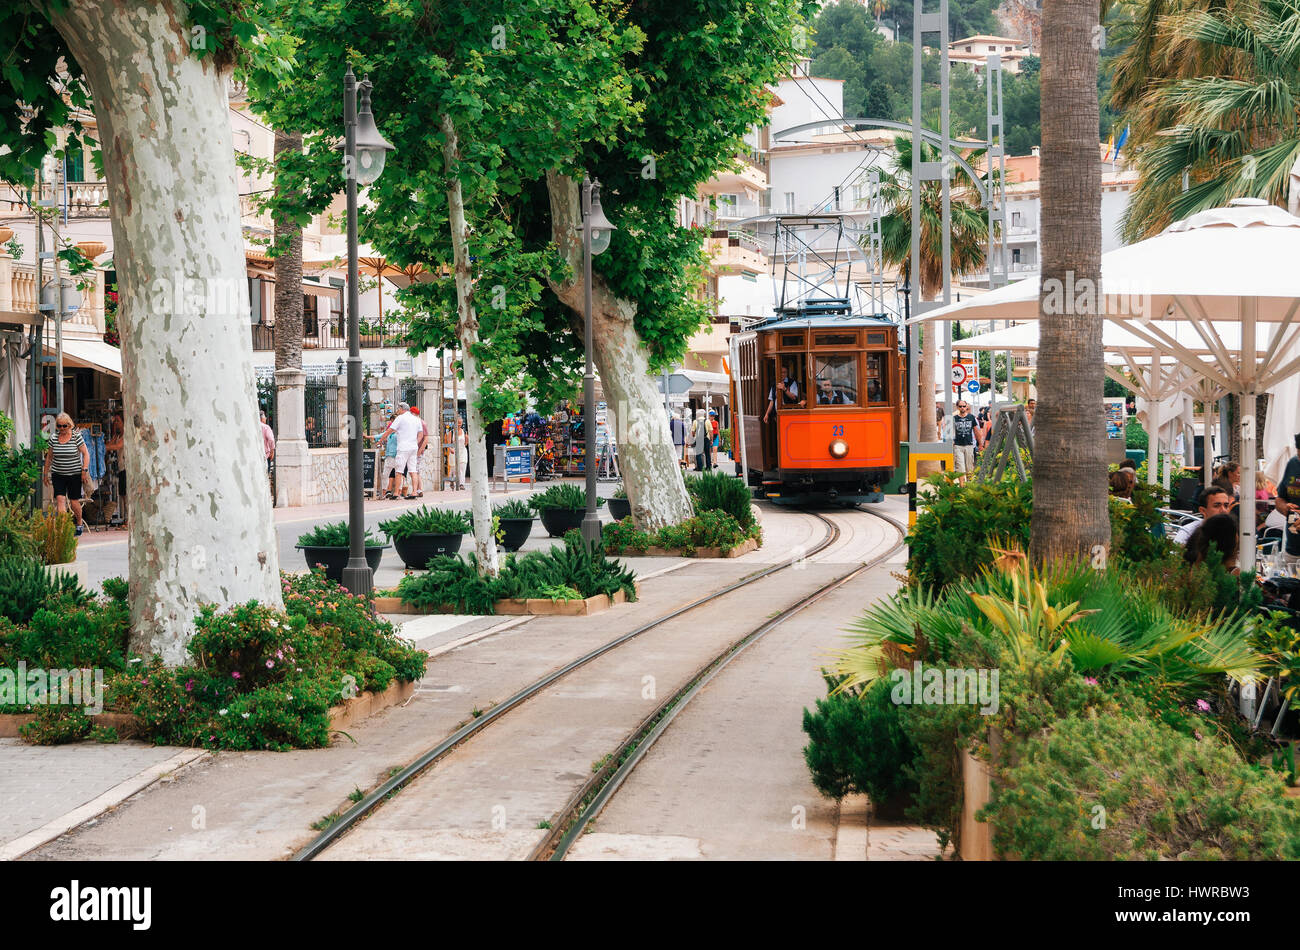 Port de Soller, Mallorca, Spain - May 26, 2016: Tram on the promenade of Puerto de Soller. Stock Photo